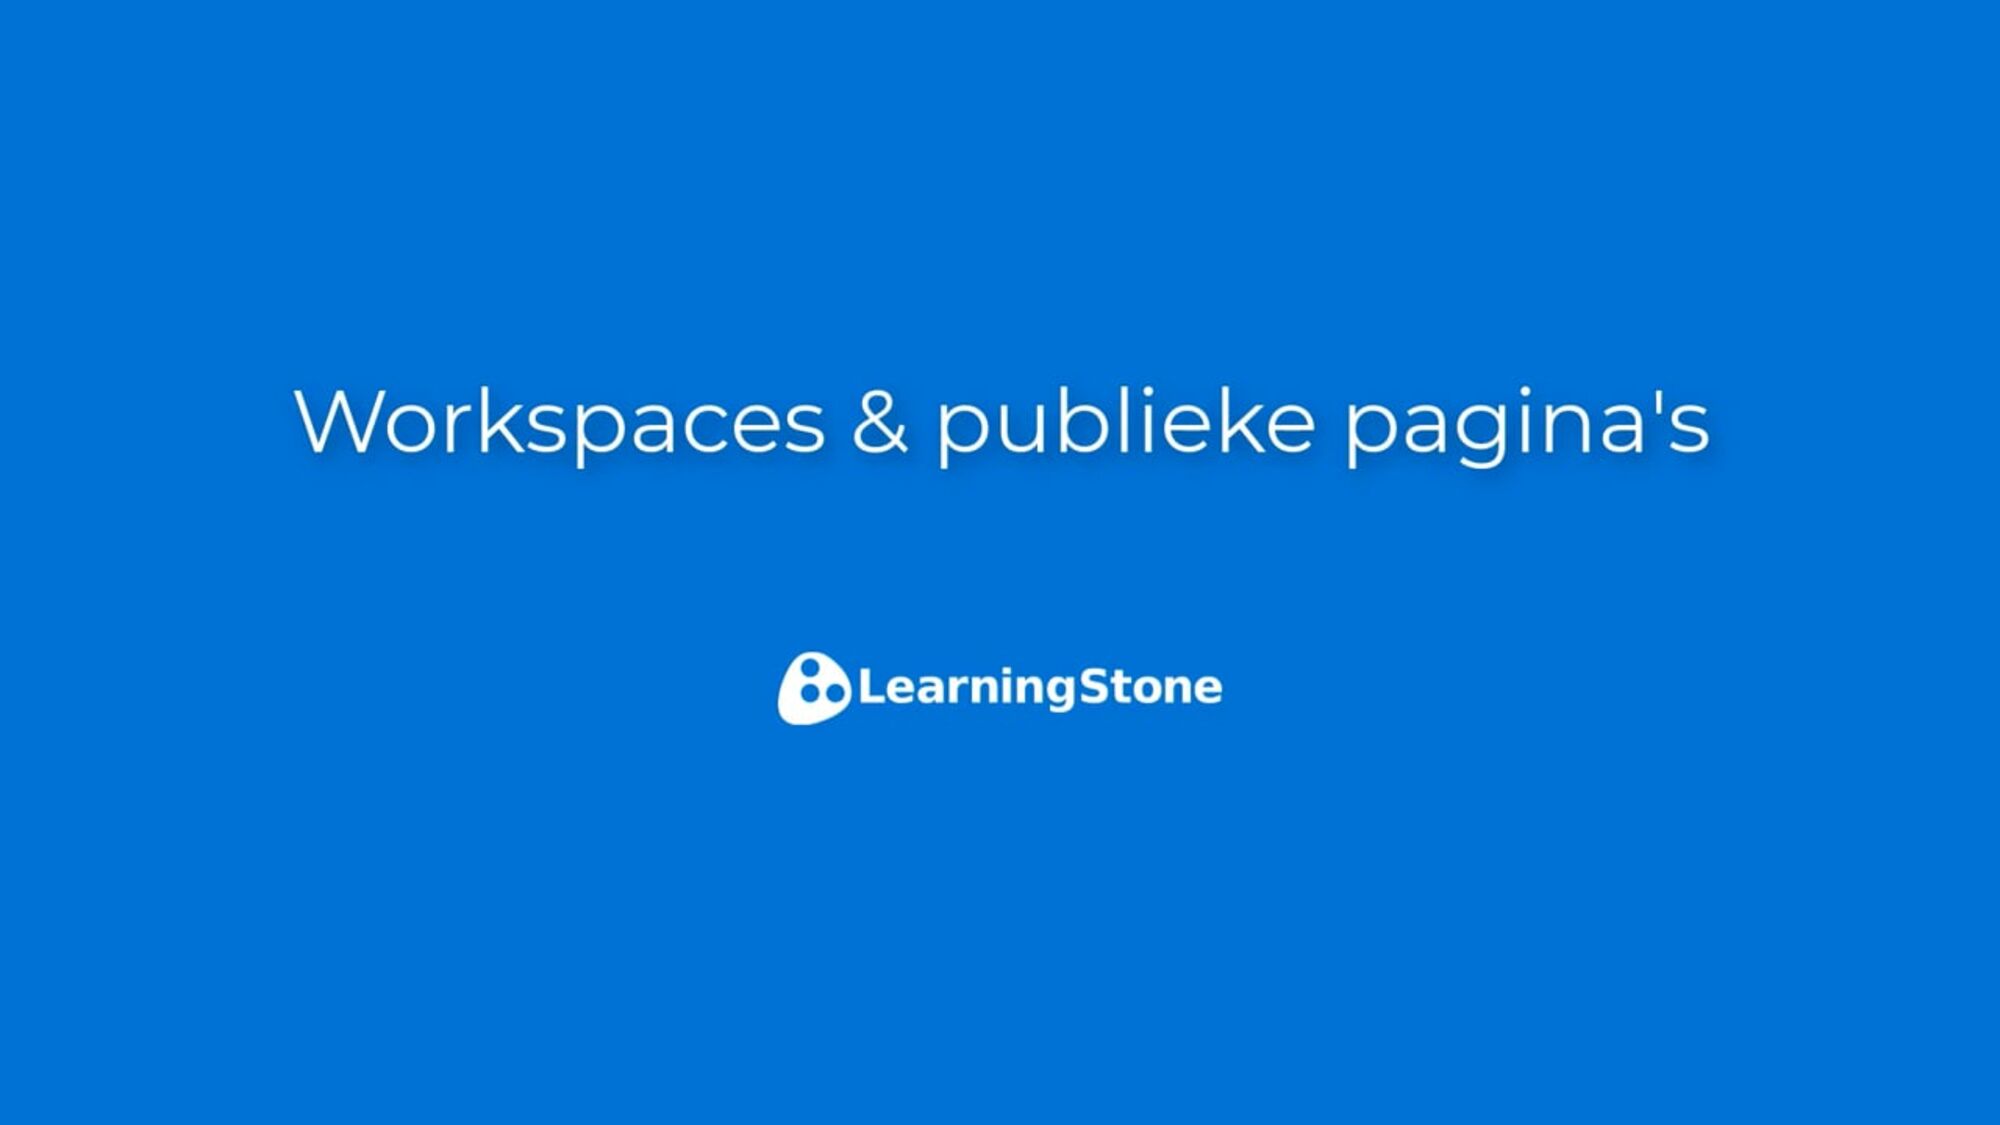 LearningStone workspaces & publieke pagina's